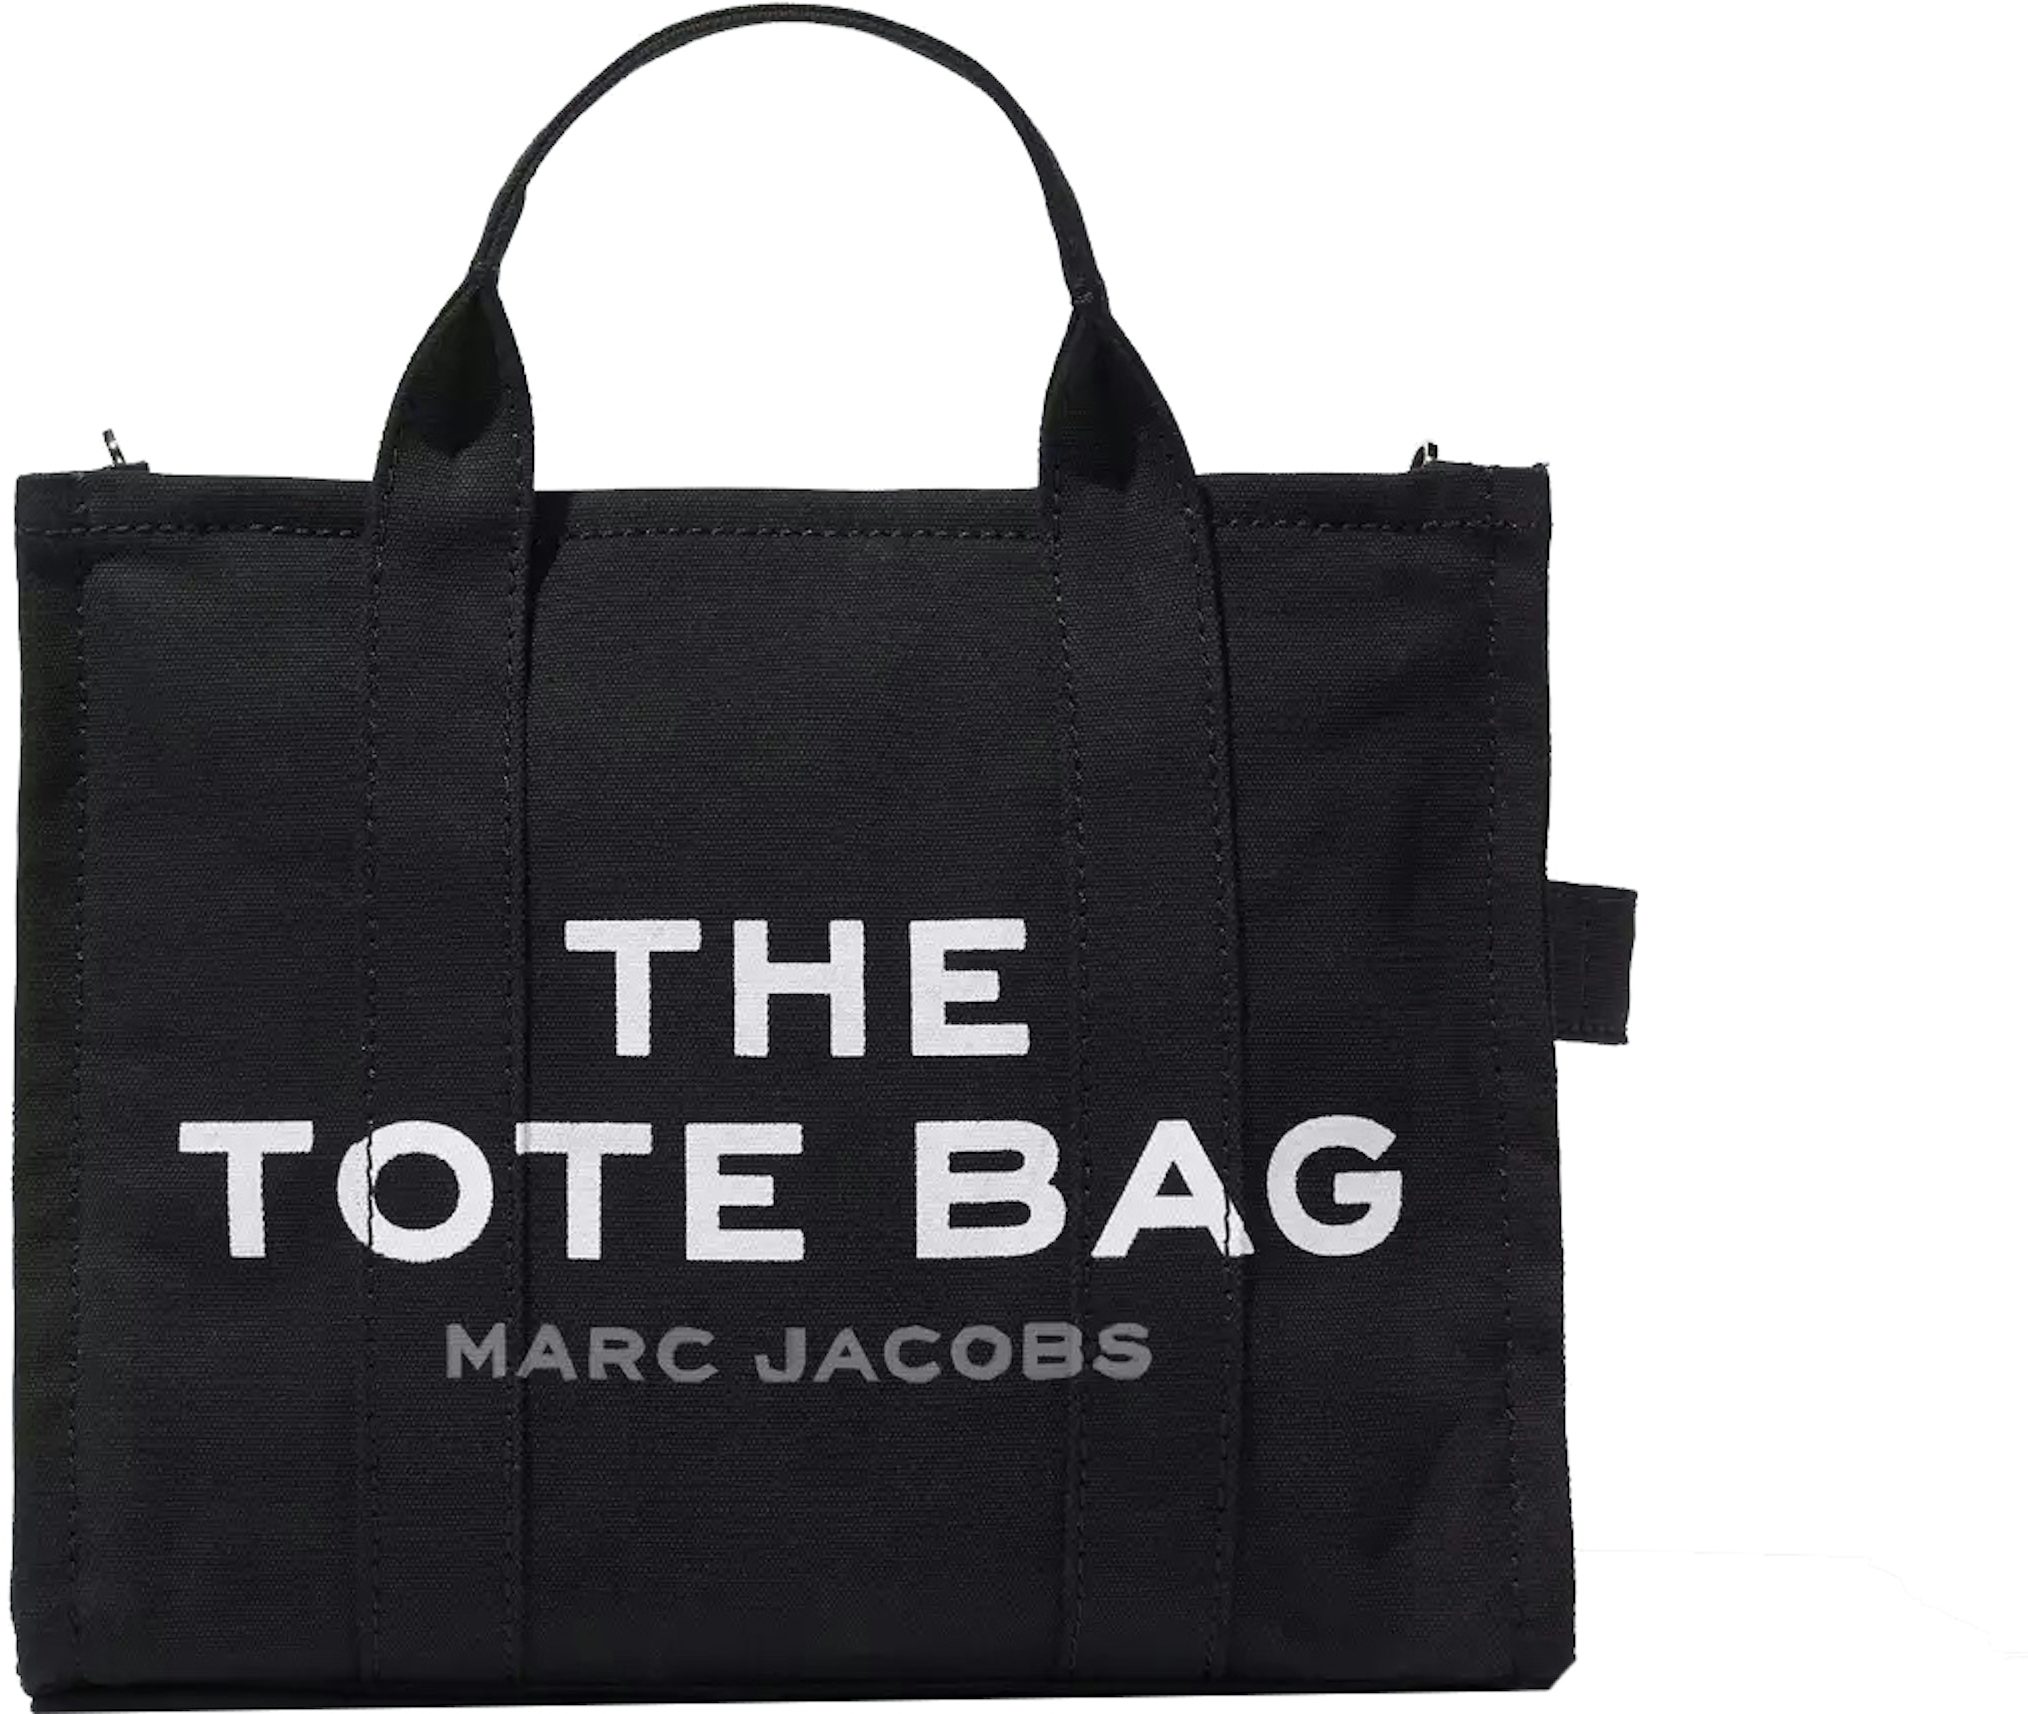 Marc Jacobs The Tote Bag VS. Louis Vuitton Speedy 25